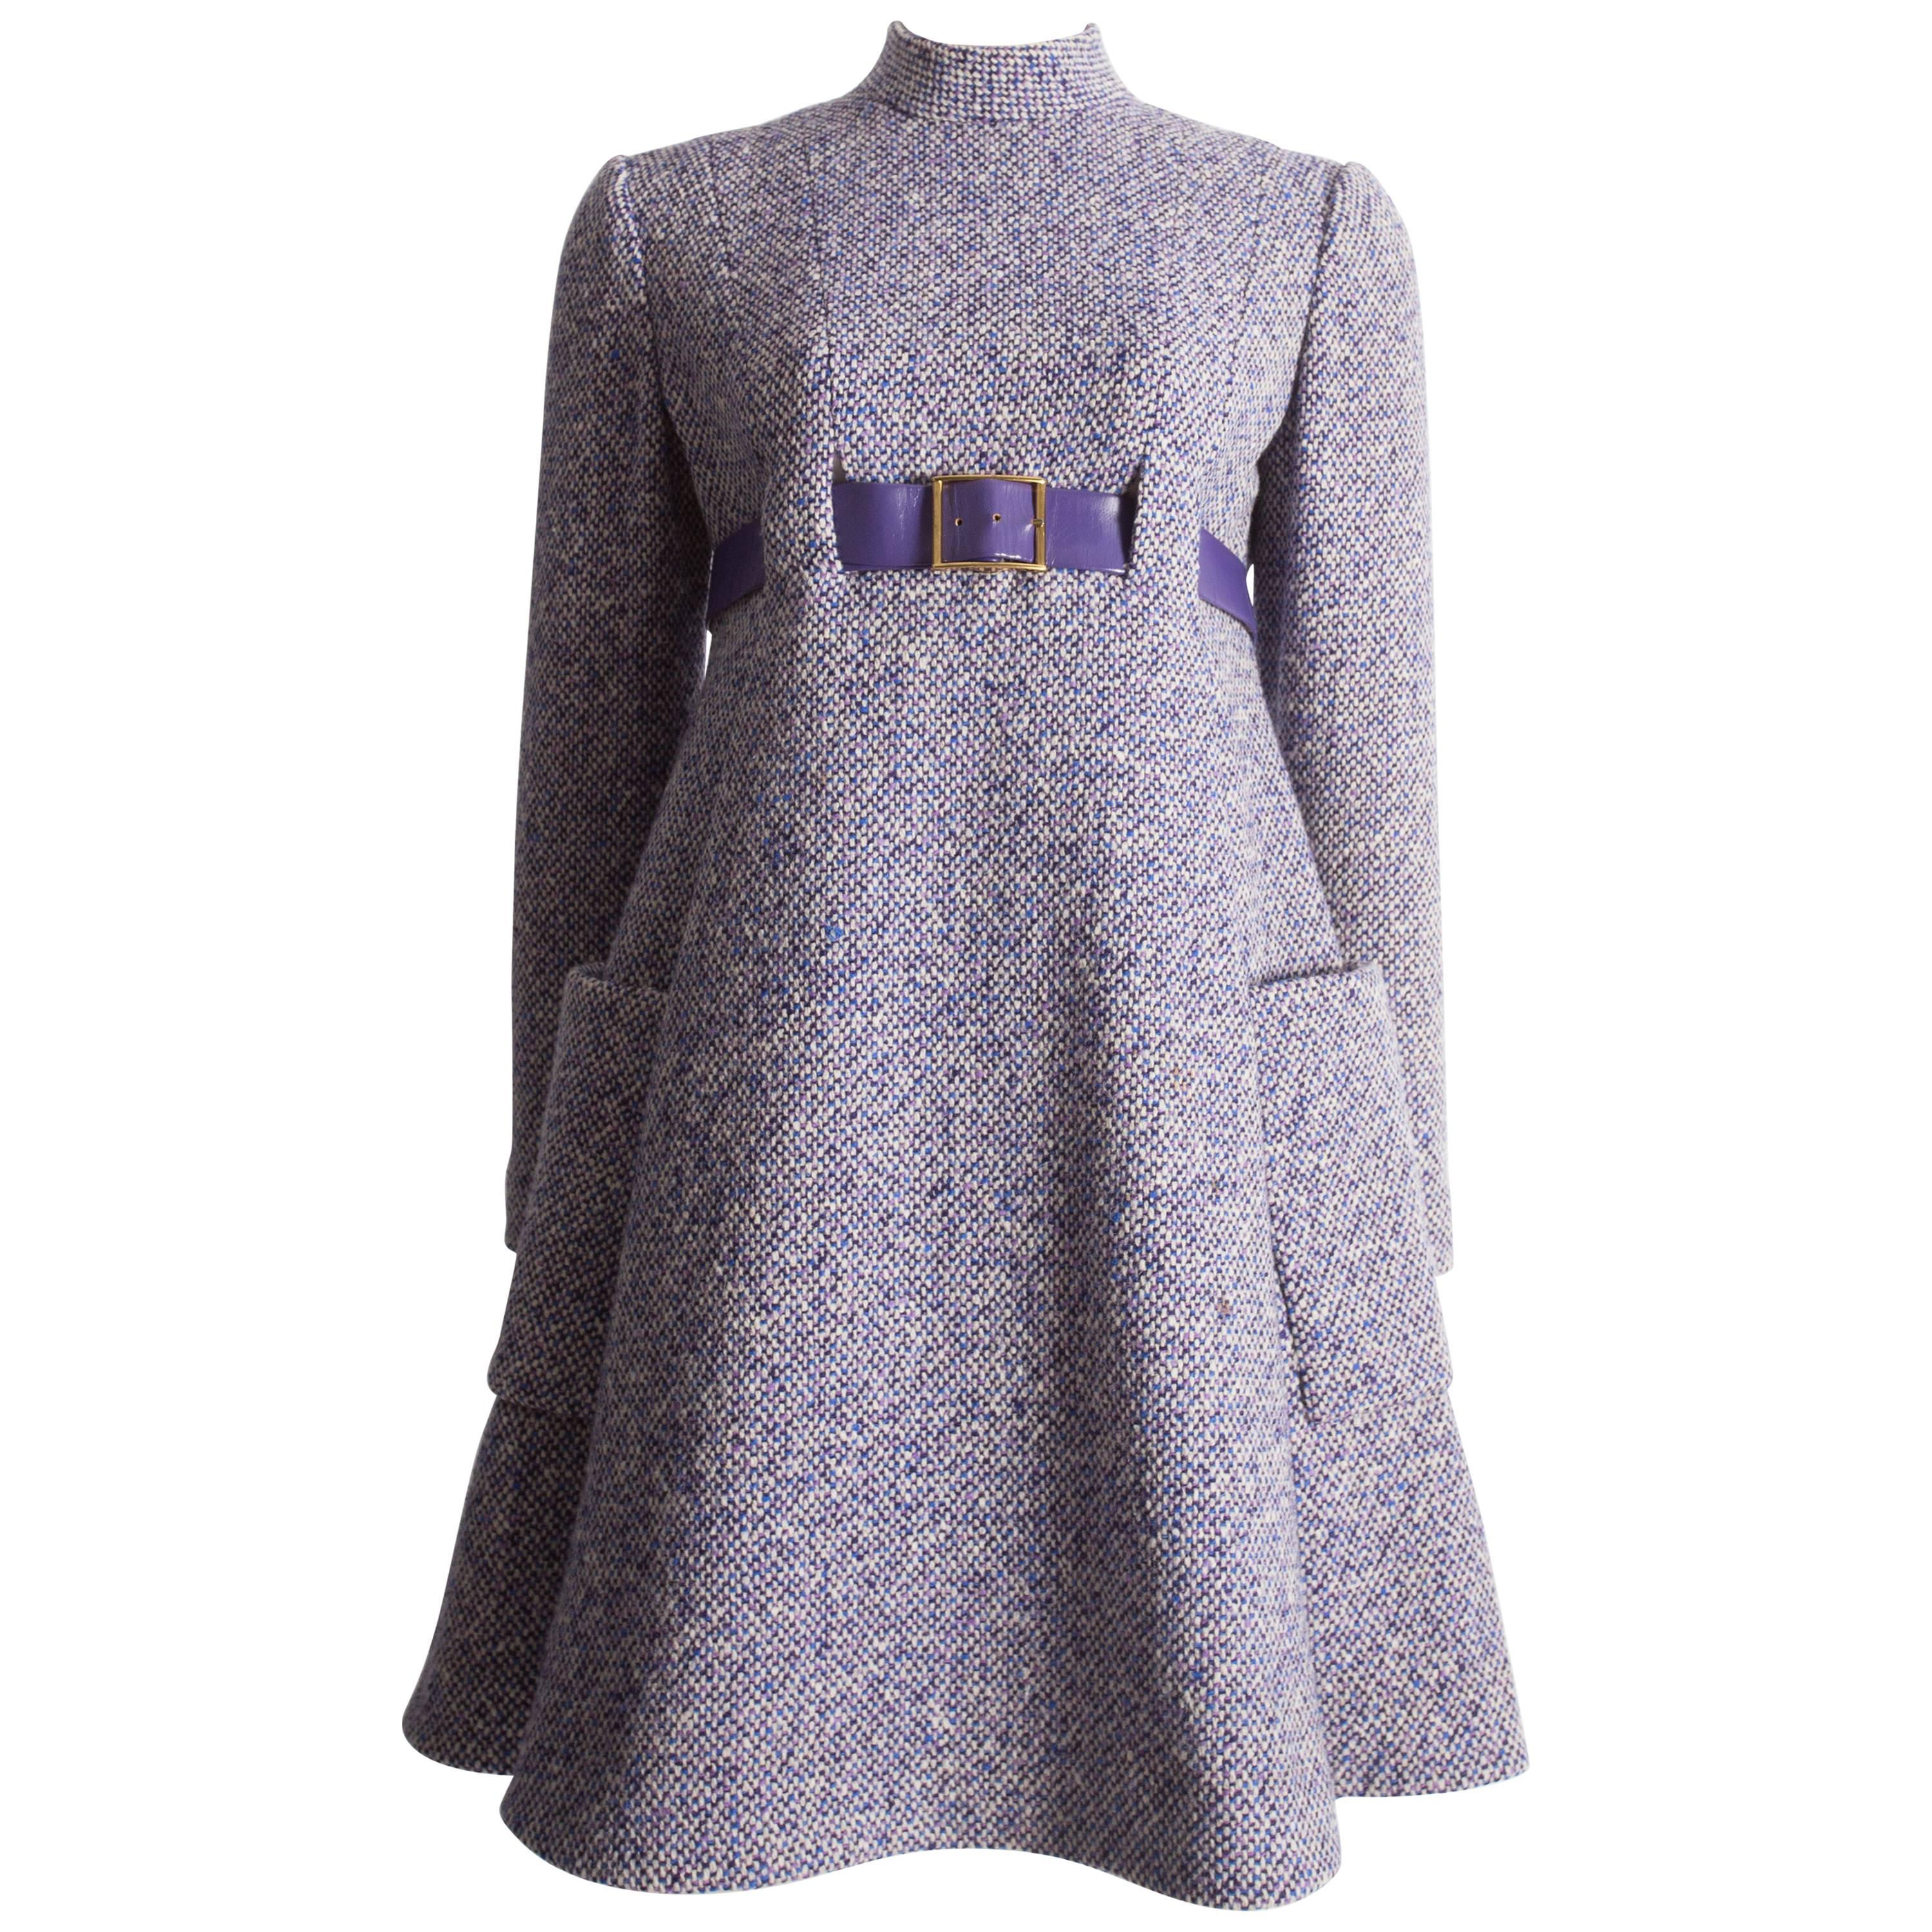 Geoffrey Beene tweed mini dress, circa 1965